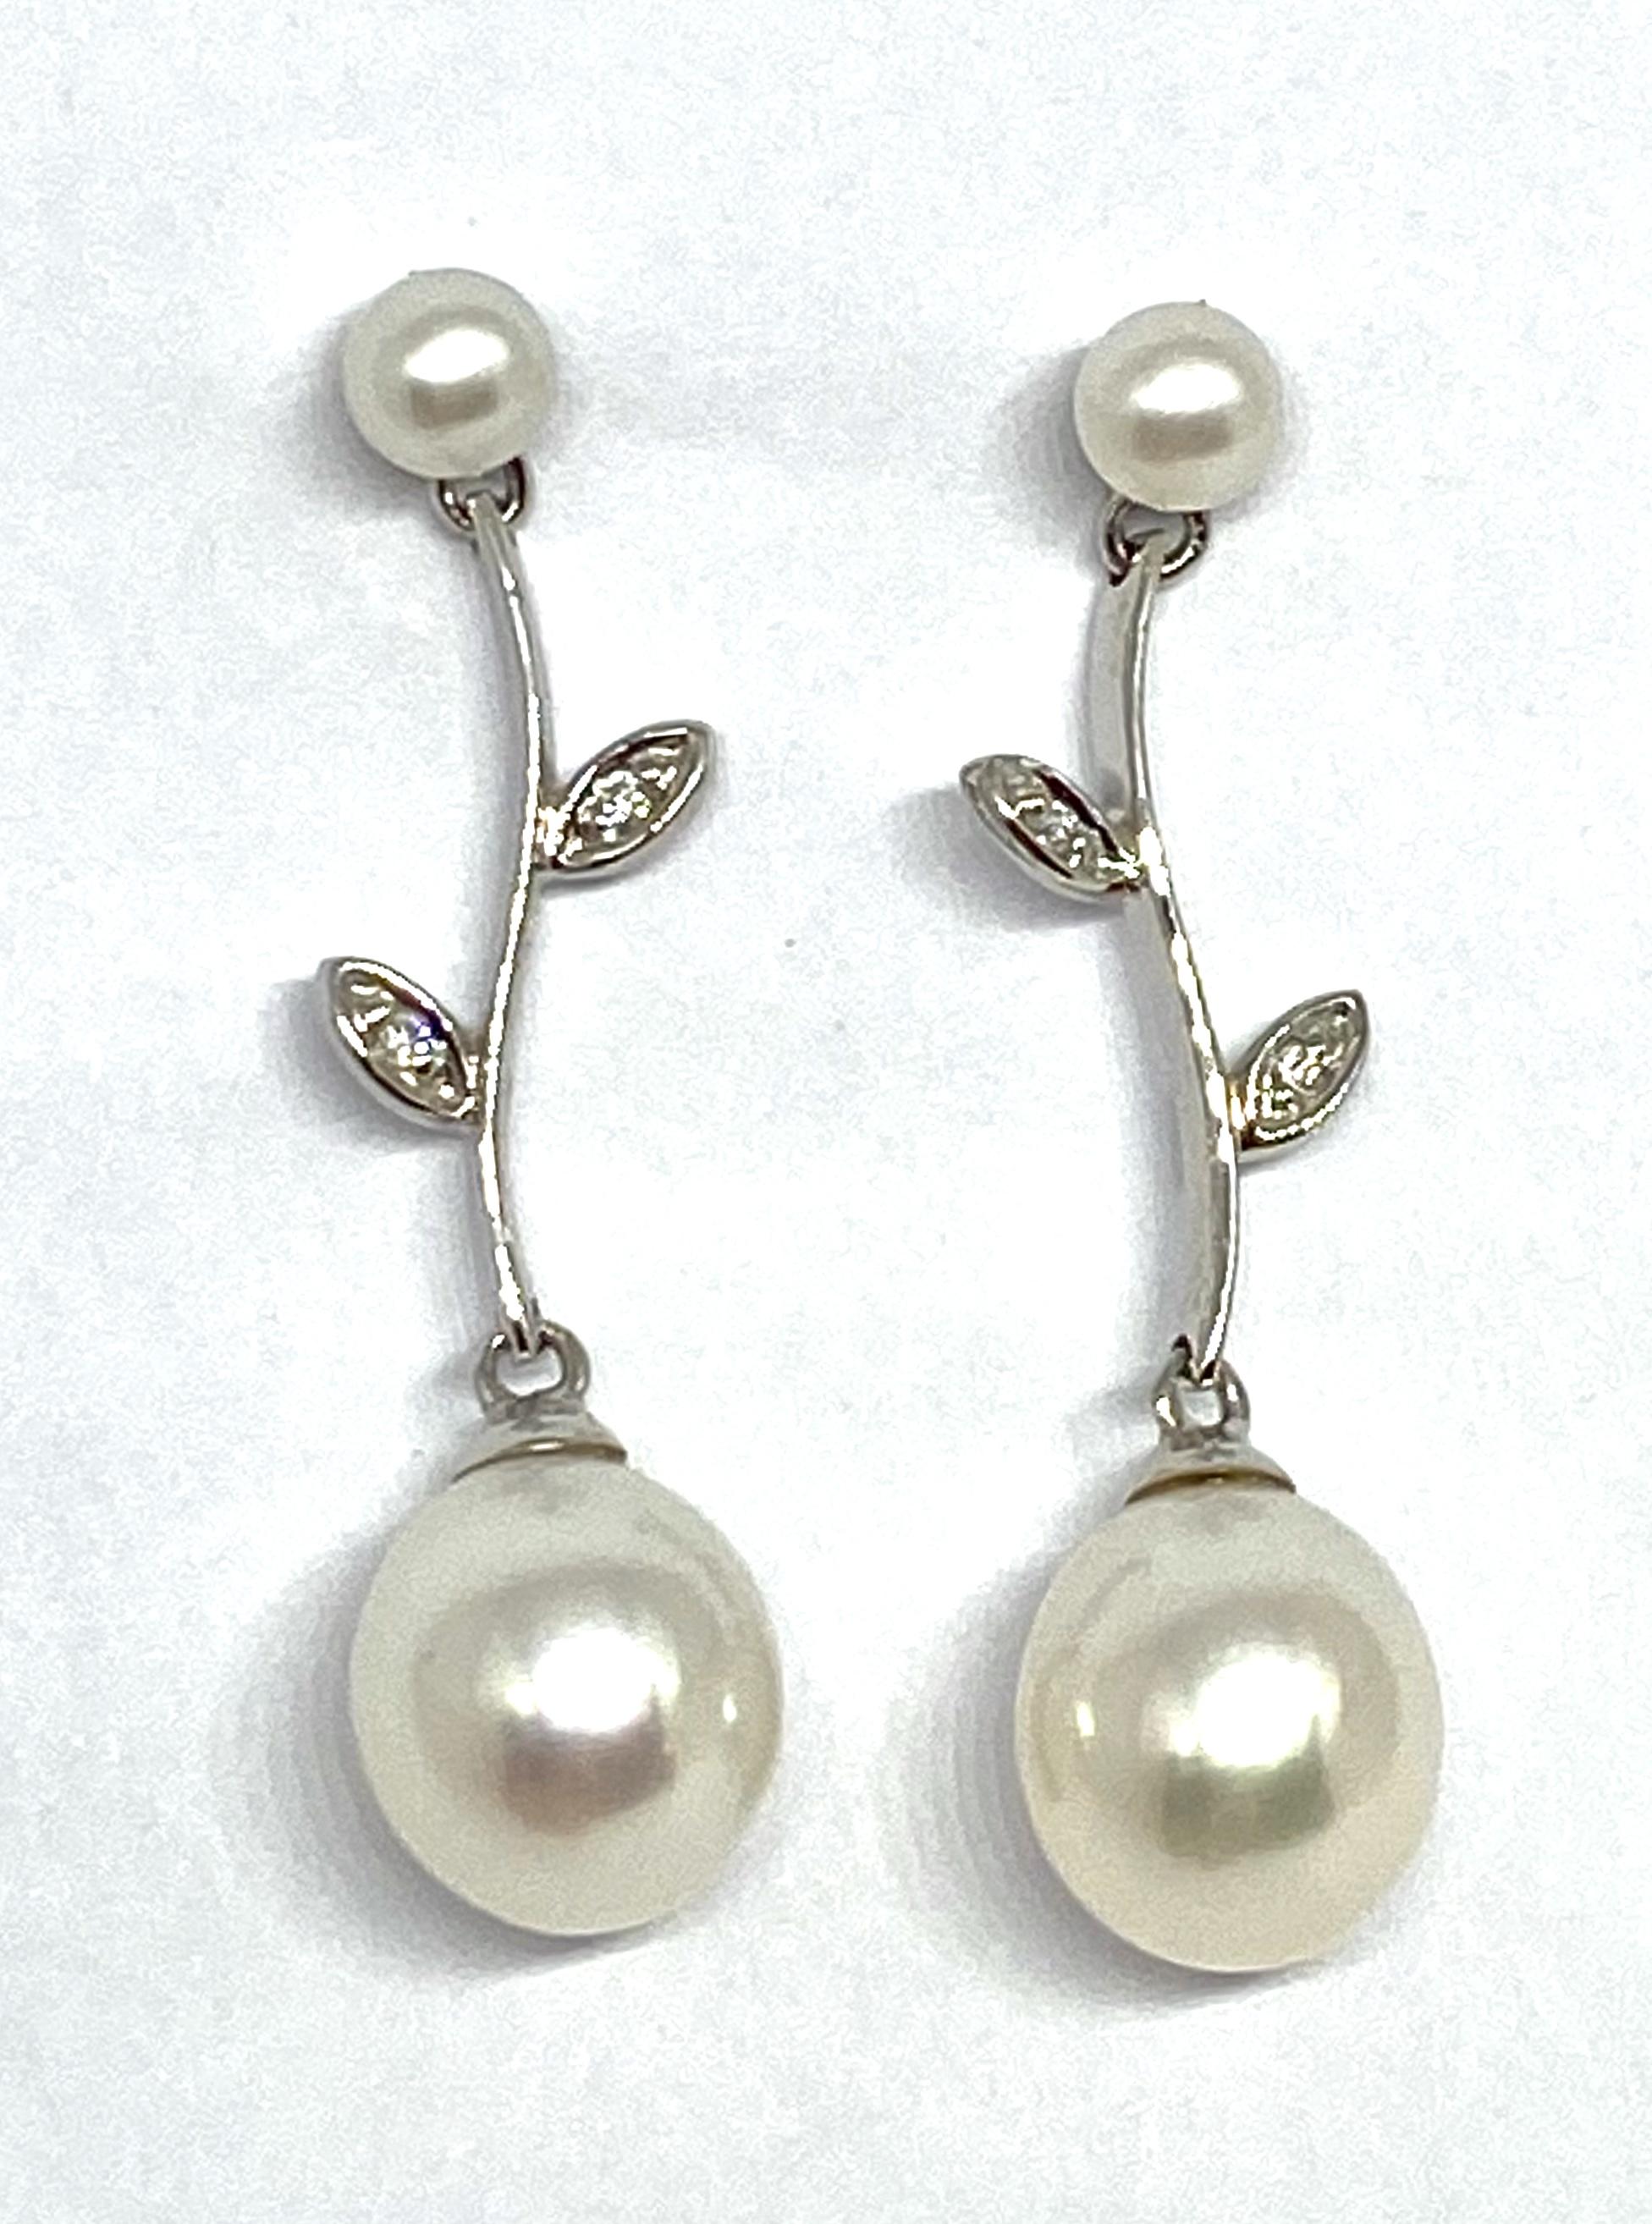 Pearl and diamond drop earrings